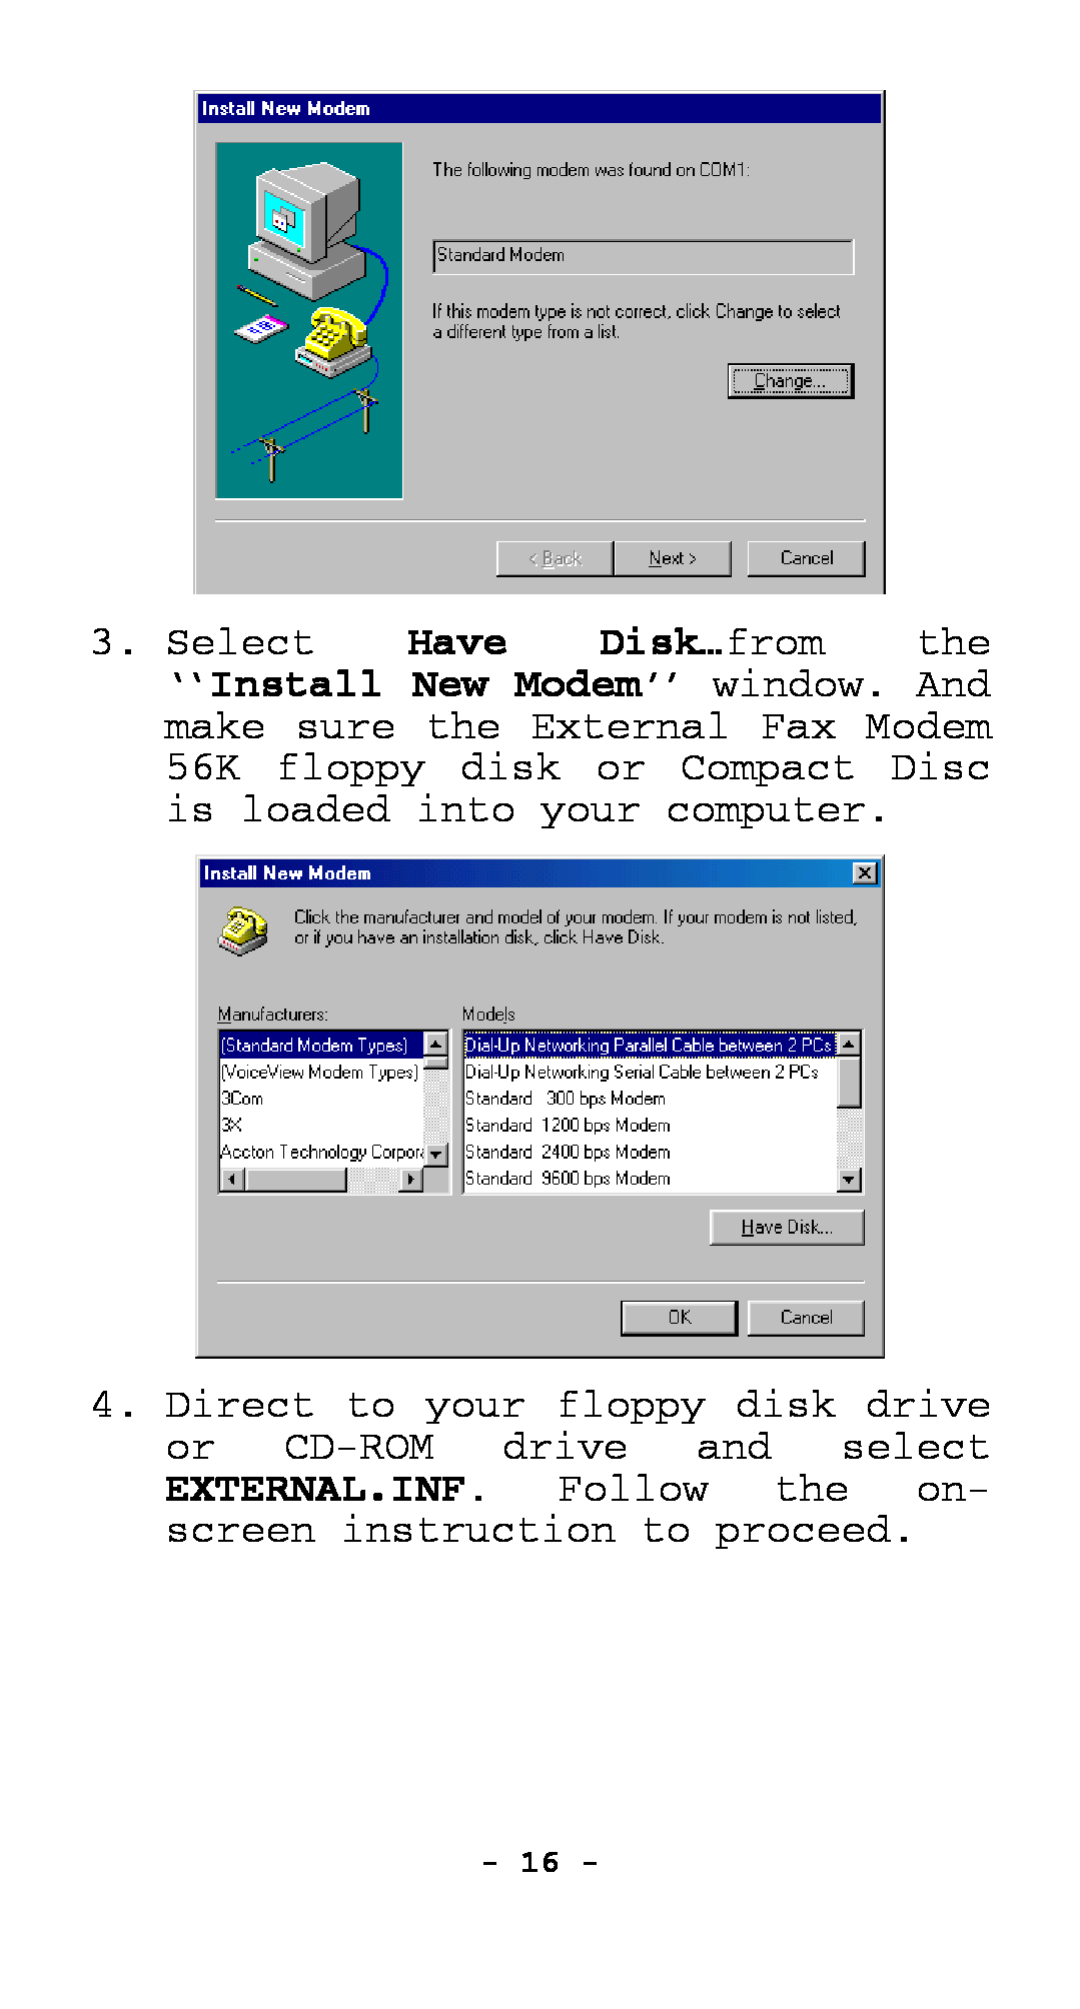 Abocom EFM560 manual 